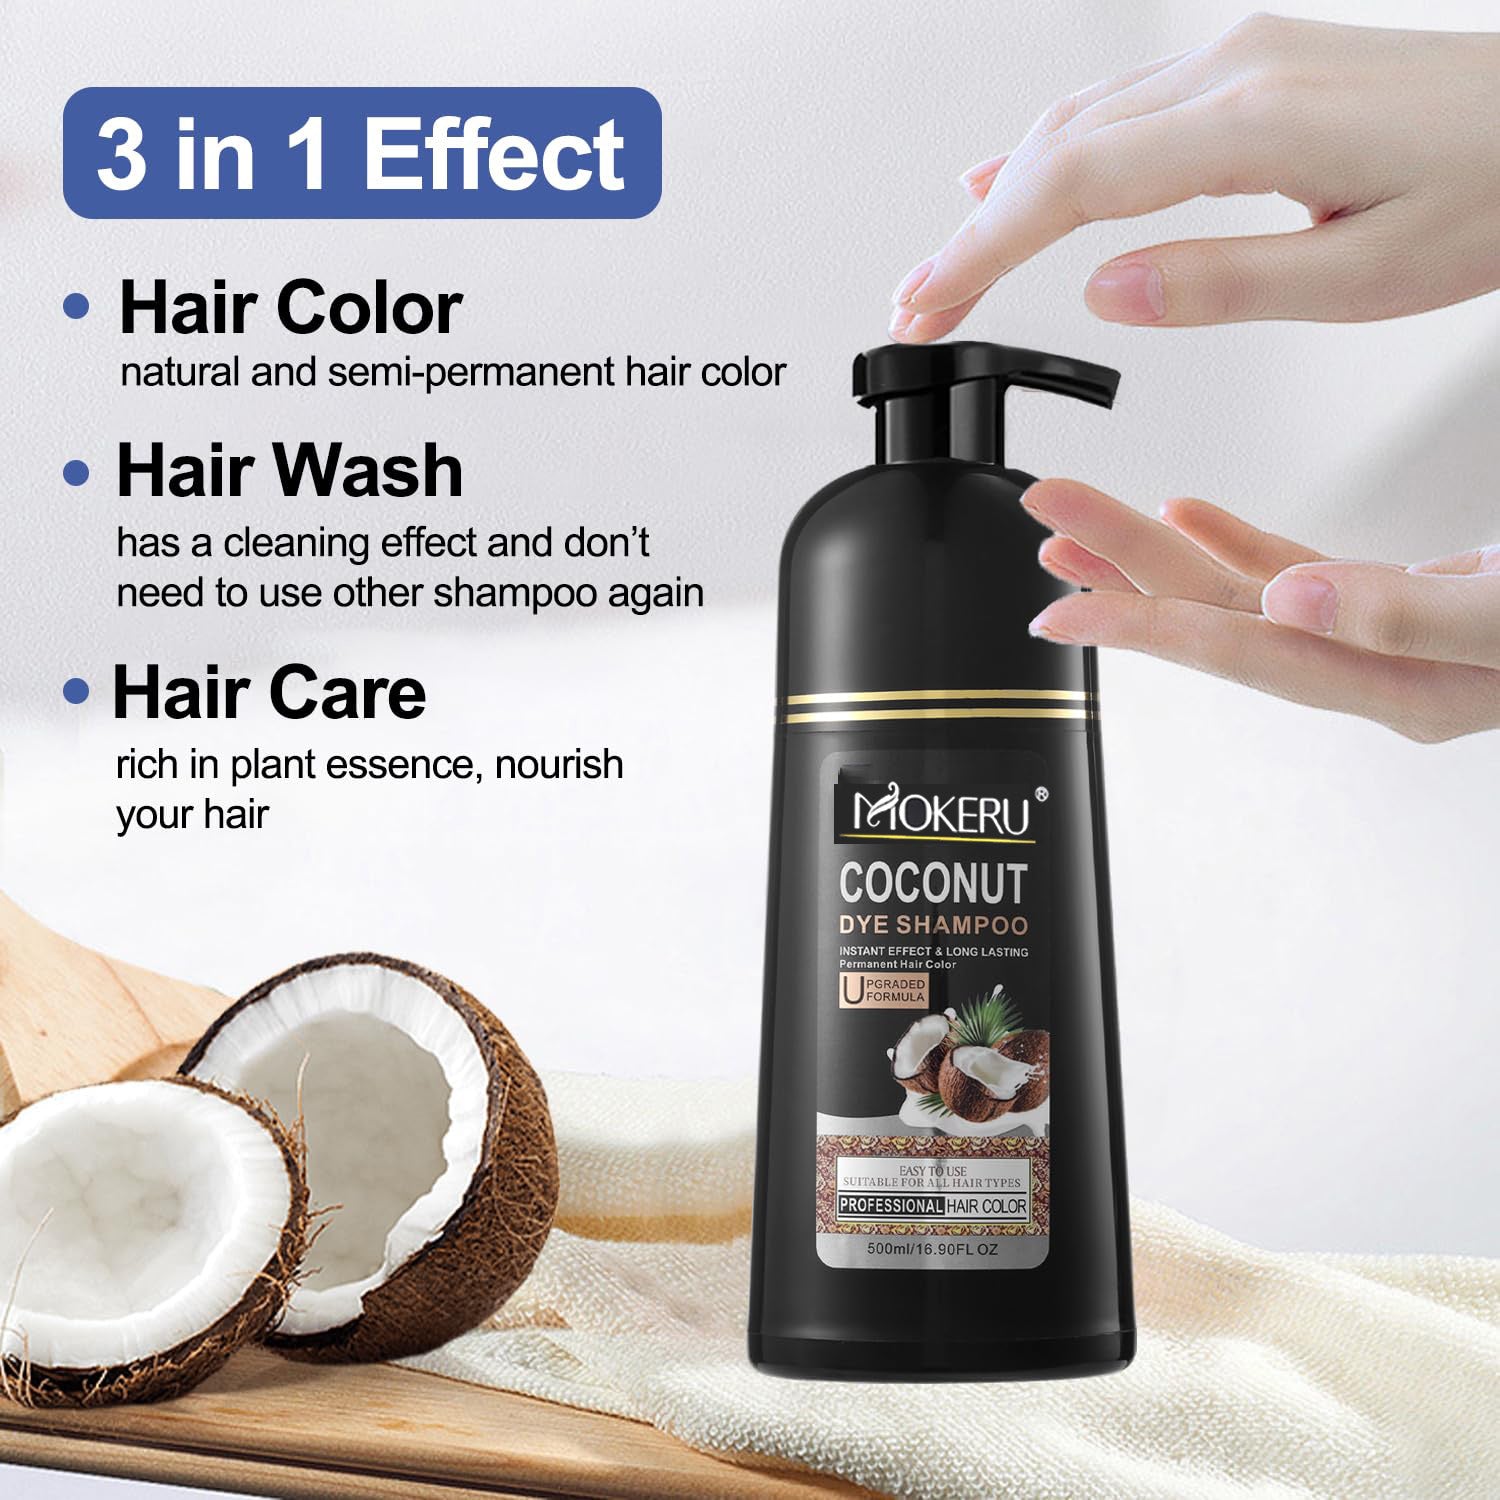 Mokeru Black Hair Dye Shampoo Fast Dyeing Long Lasting Organic Natural Pure Coconut Hair Dye Colour Shampoo for Home Dyeing